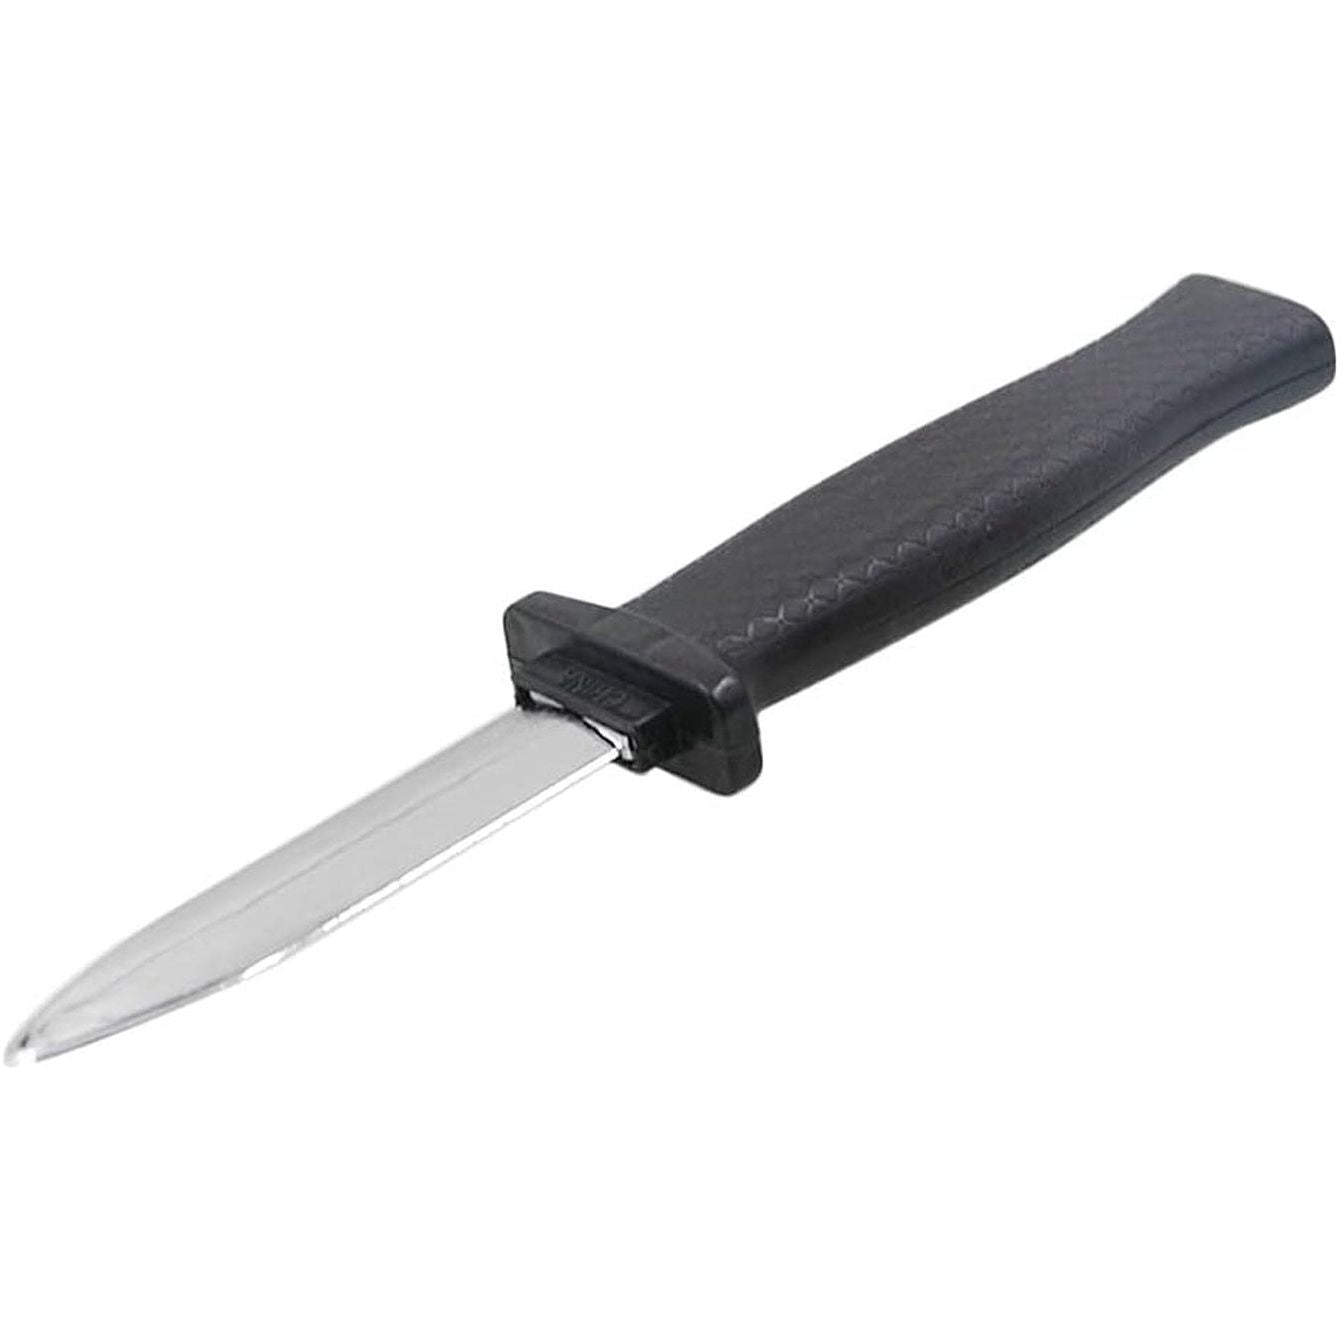 Retractable Plastic Knife